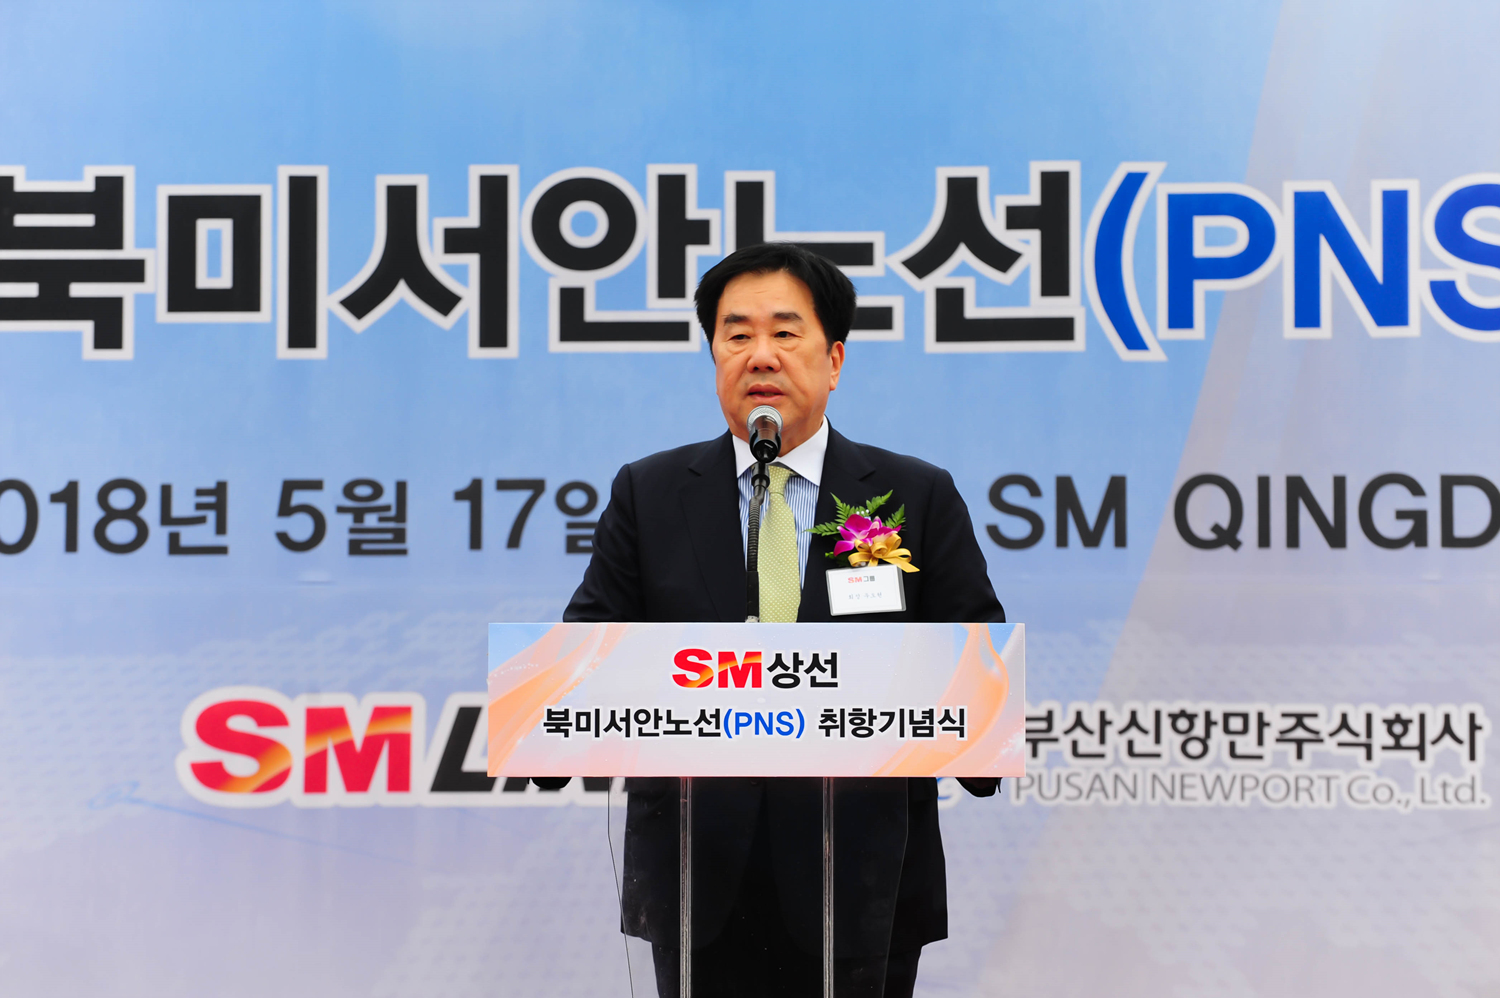 2. SM그룹 우오현 회장이 SM상선 미주노선 취항식에 참석해 축사를 하고 있다..jpg